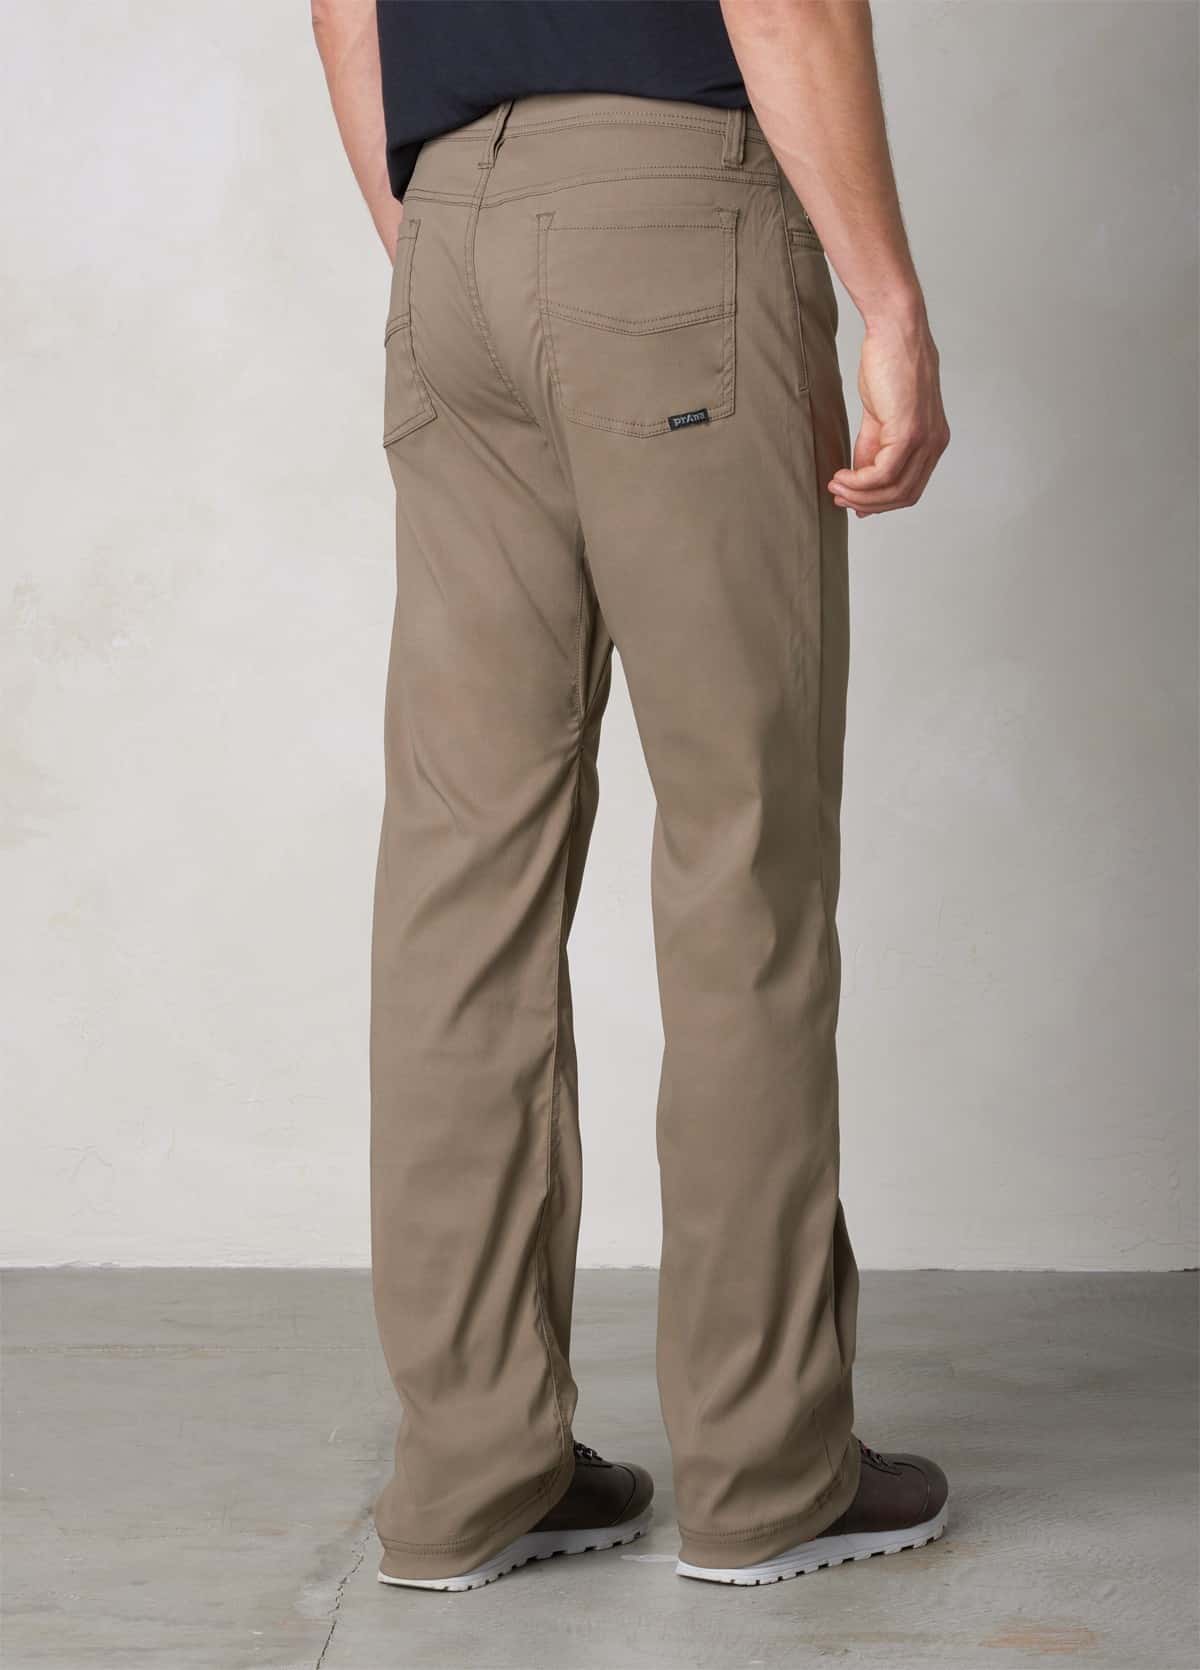 Prana Brion - work pants for men